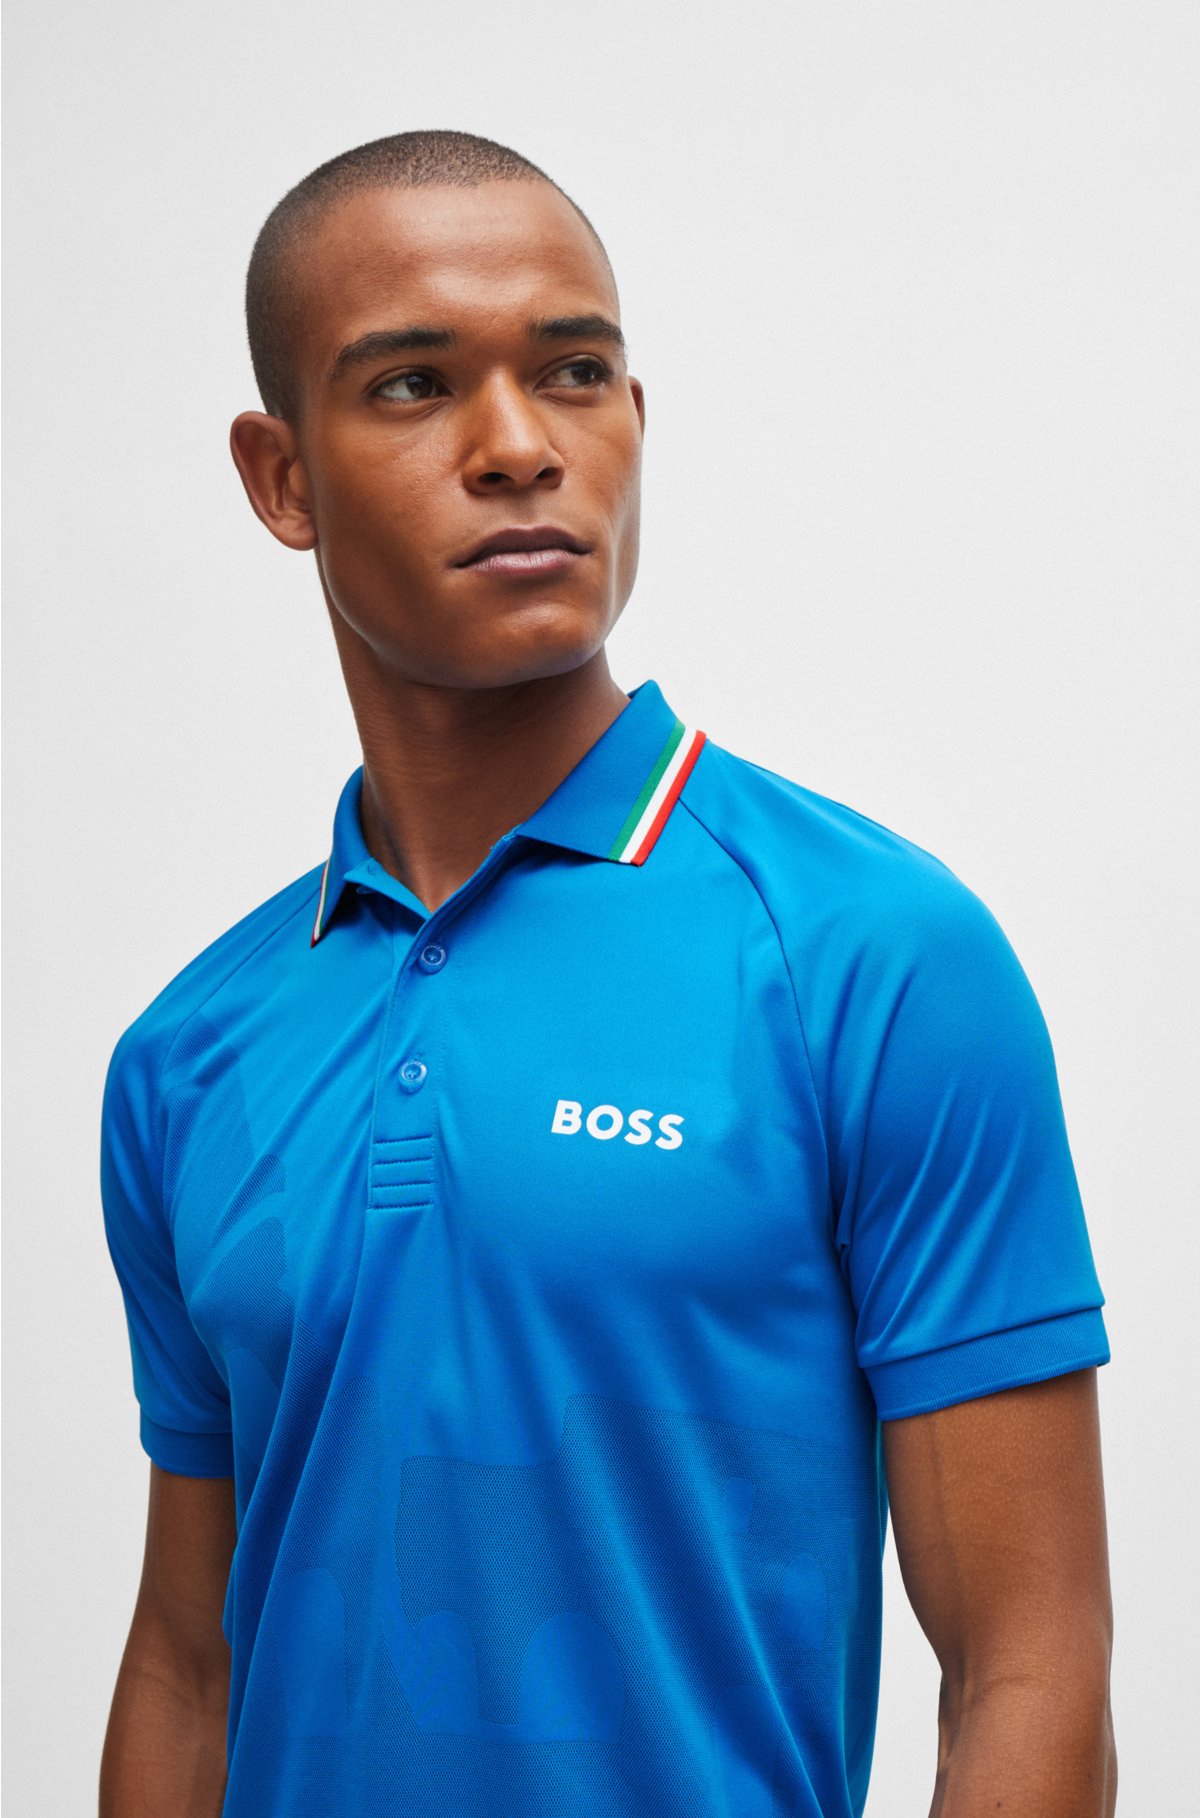 BOSS x MATTEO BERRETTINI slim-fit polo shirt in engineered jacquard jersey, Blue